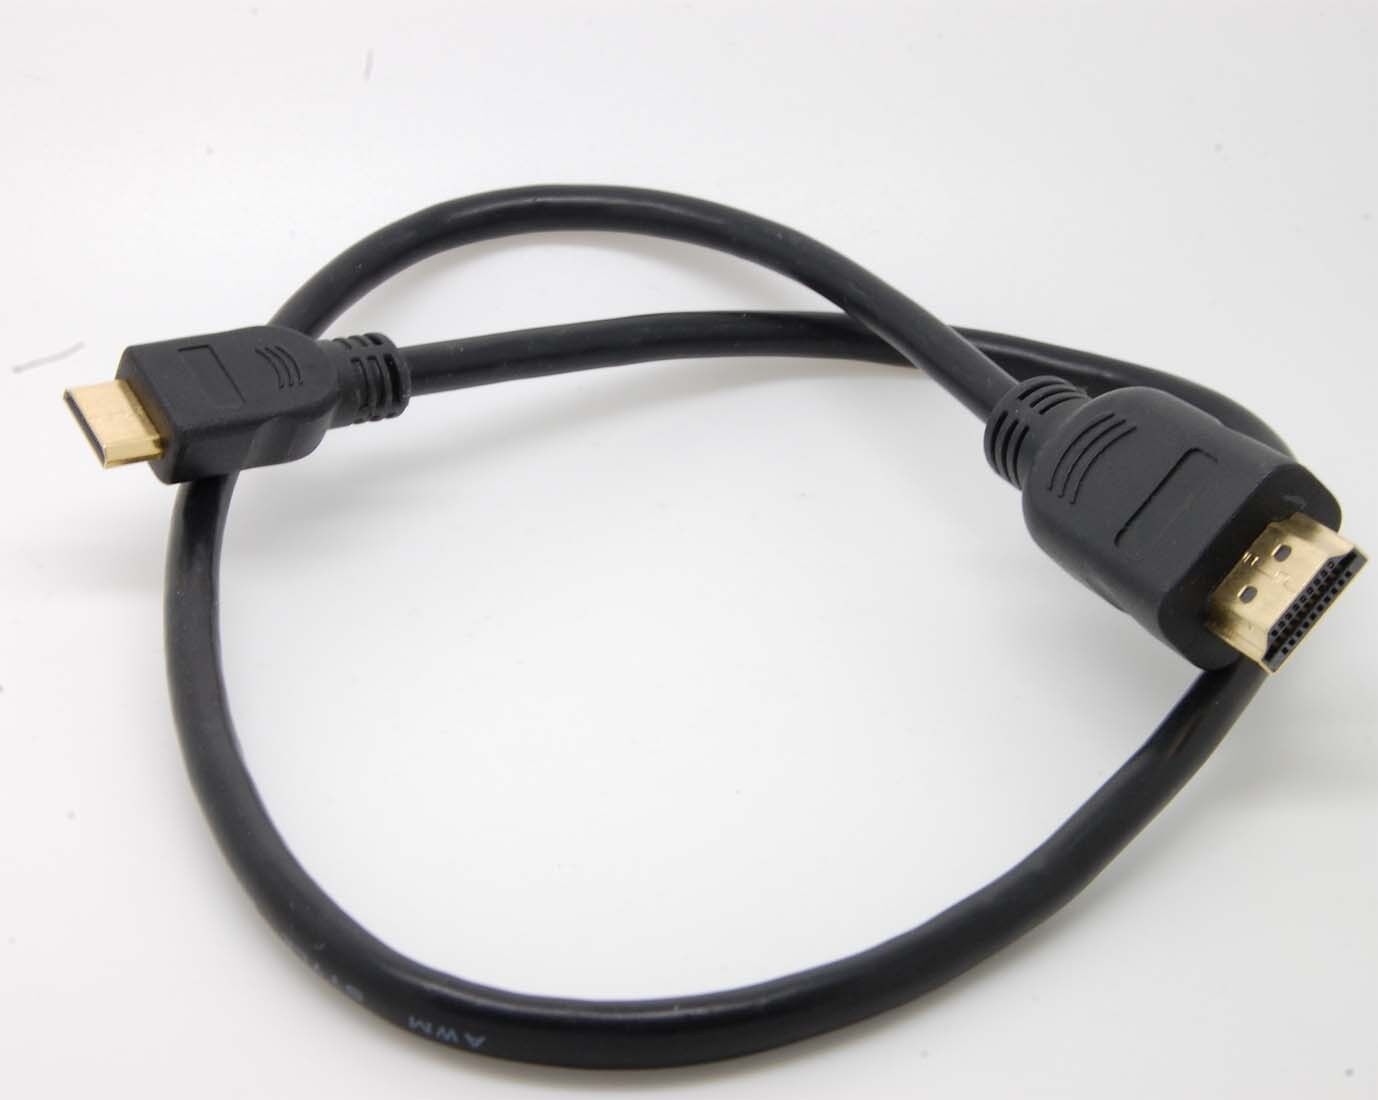 sensor Veluddannet blæk mini HDMI A/V Video Cable Cord For Canon Powershot SX40 HS SX130 IS  Camera_gm | eBay